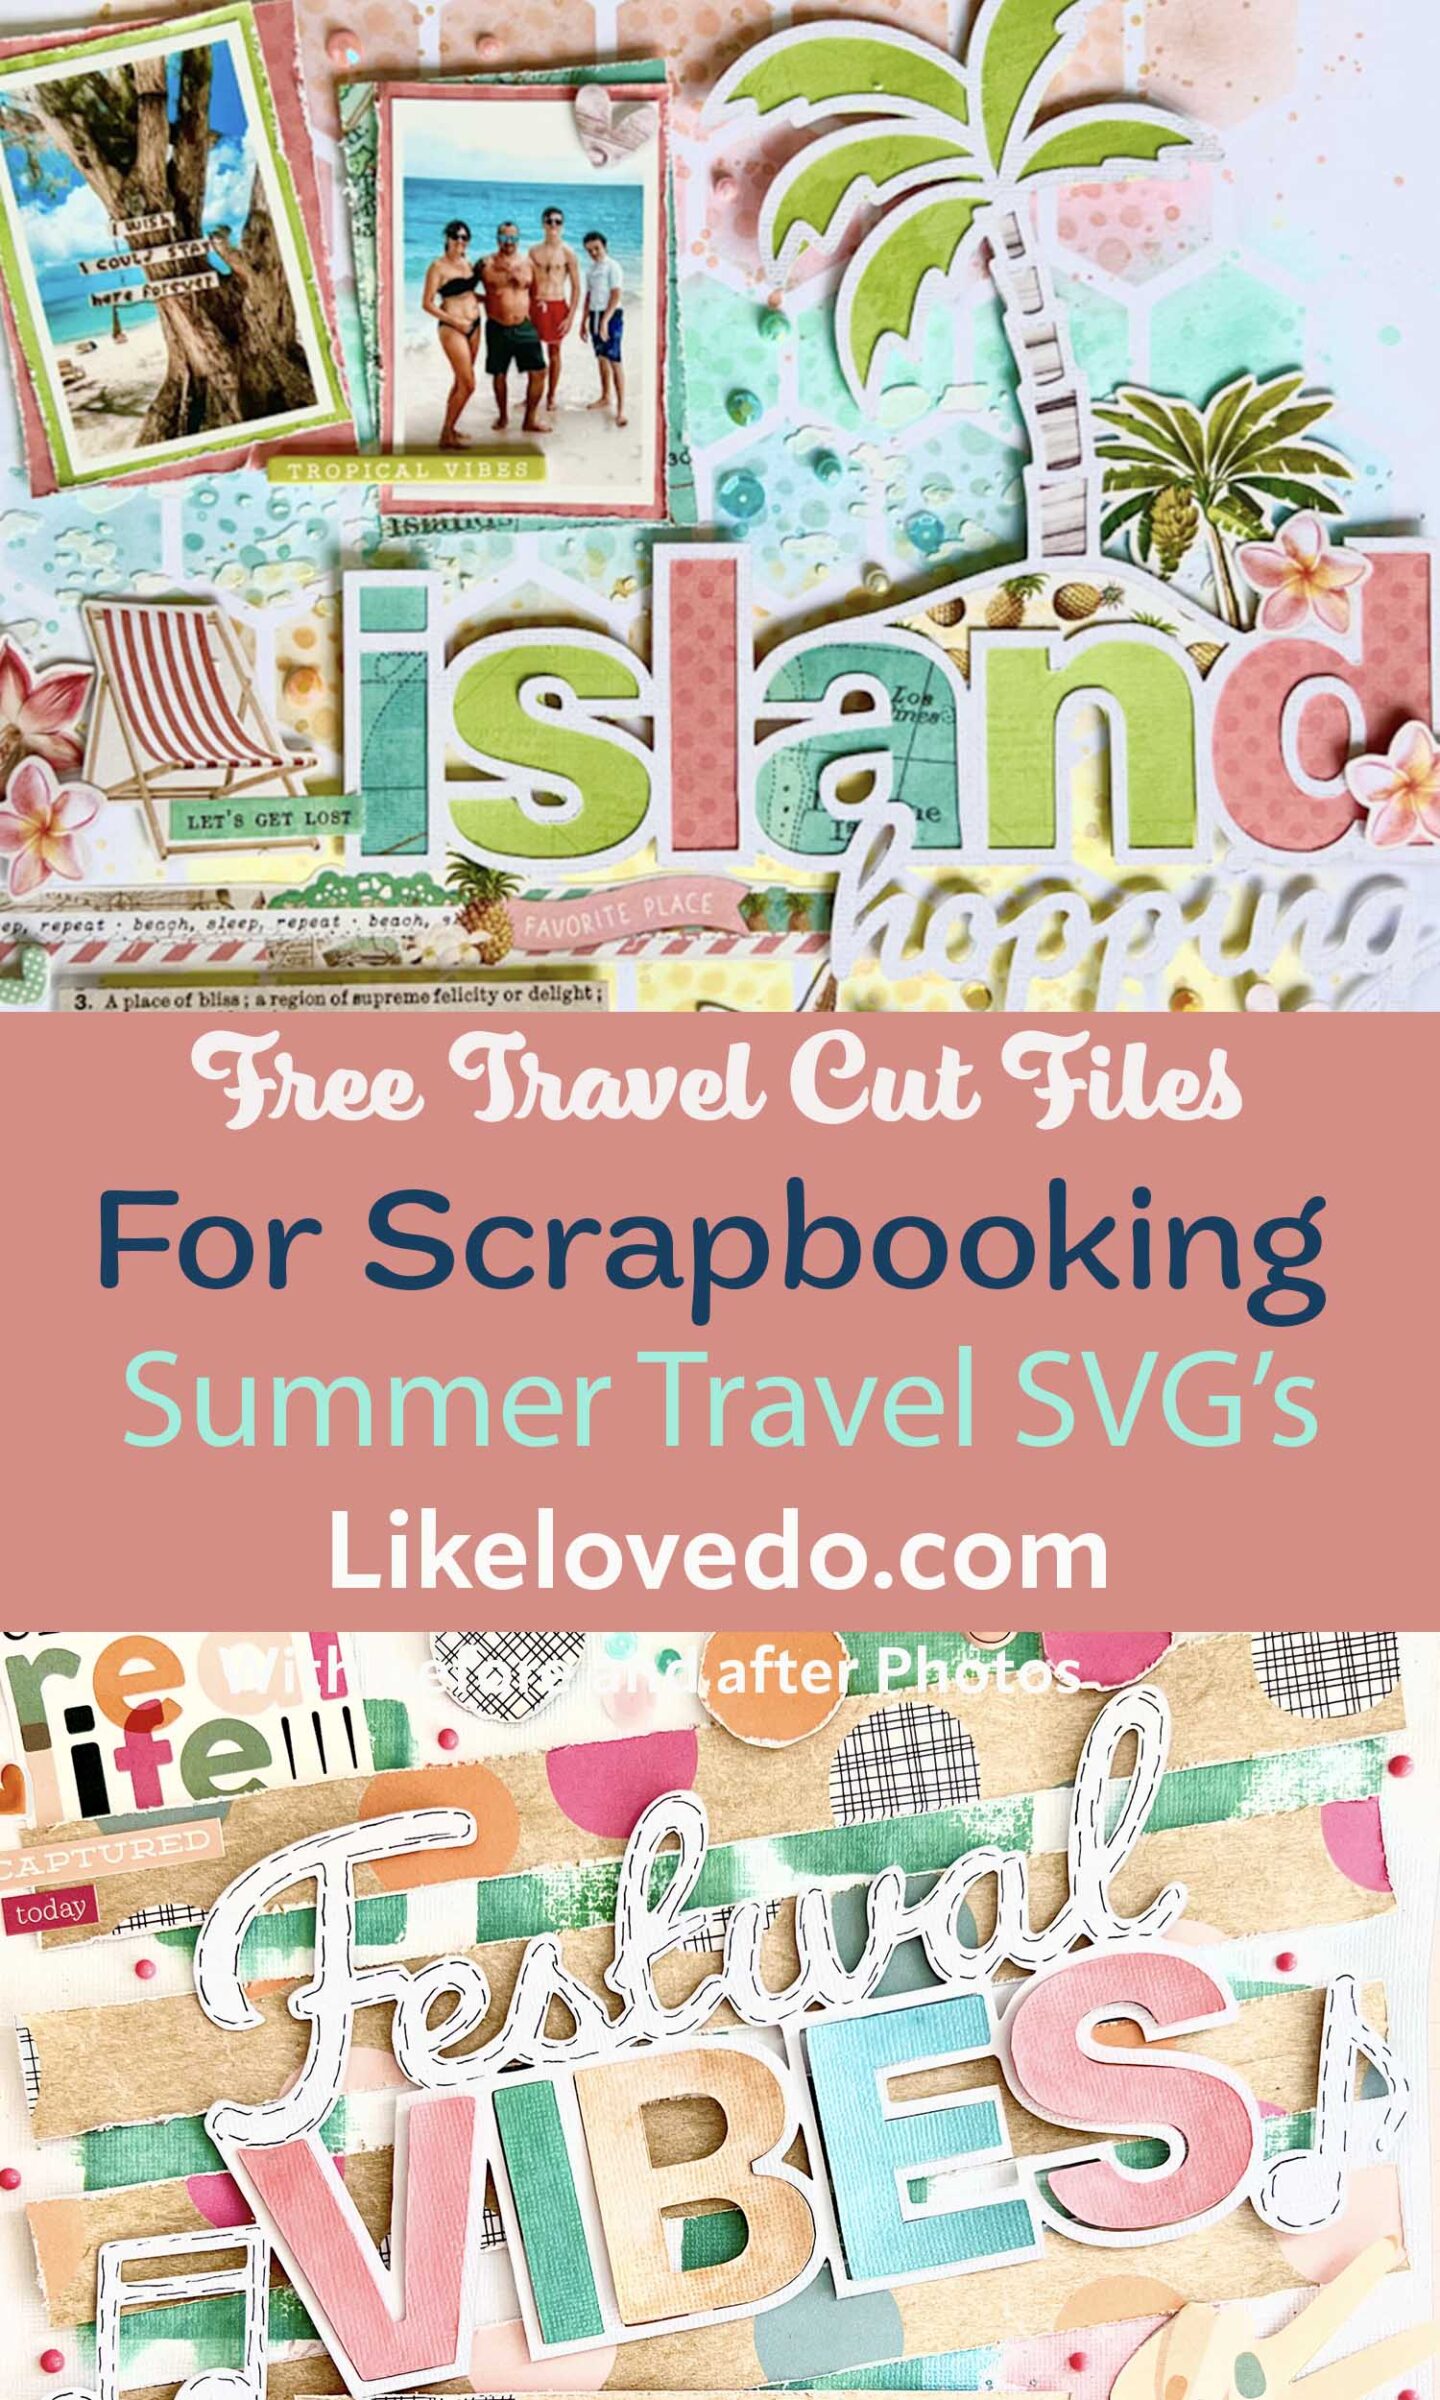 Free Travel Scrapbooking cut files for summer vacation photos. Free summer scrapbooking SVGs and scrapbooking ideas